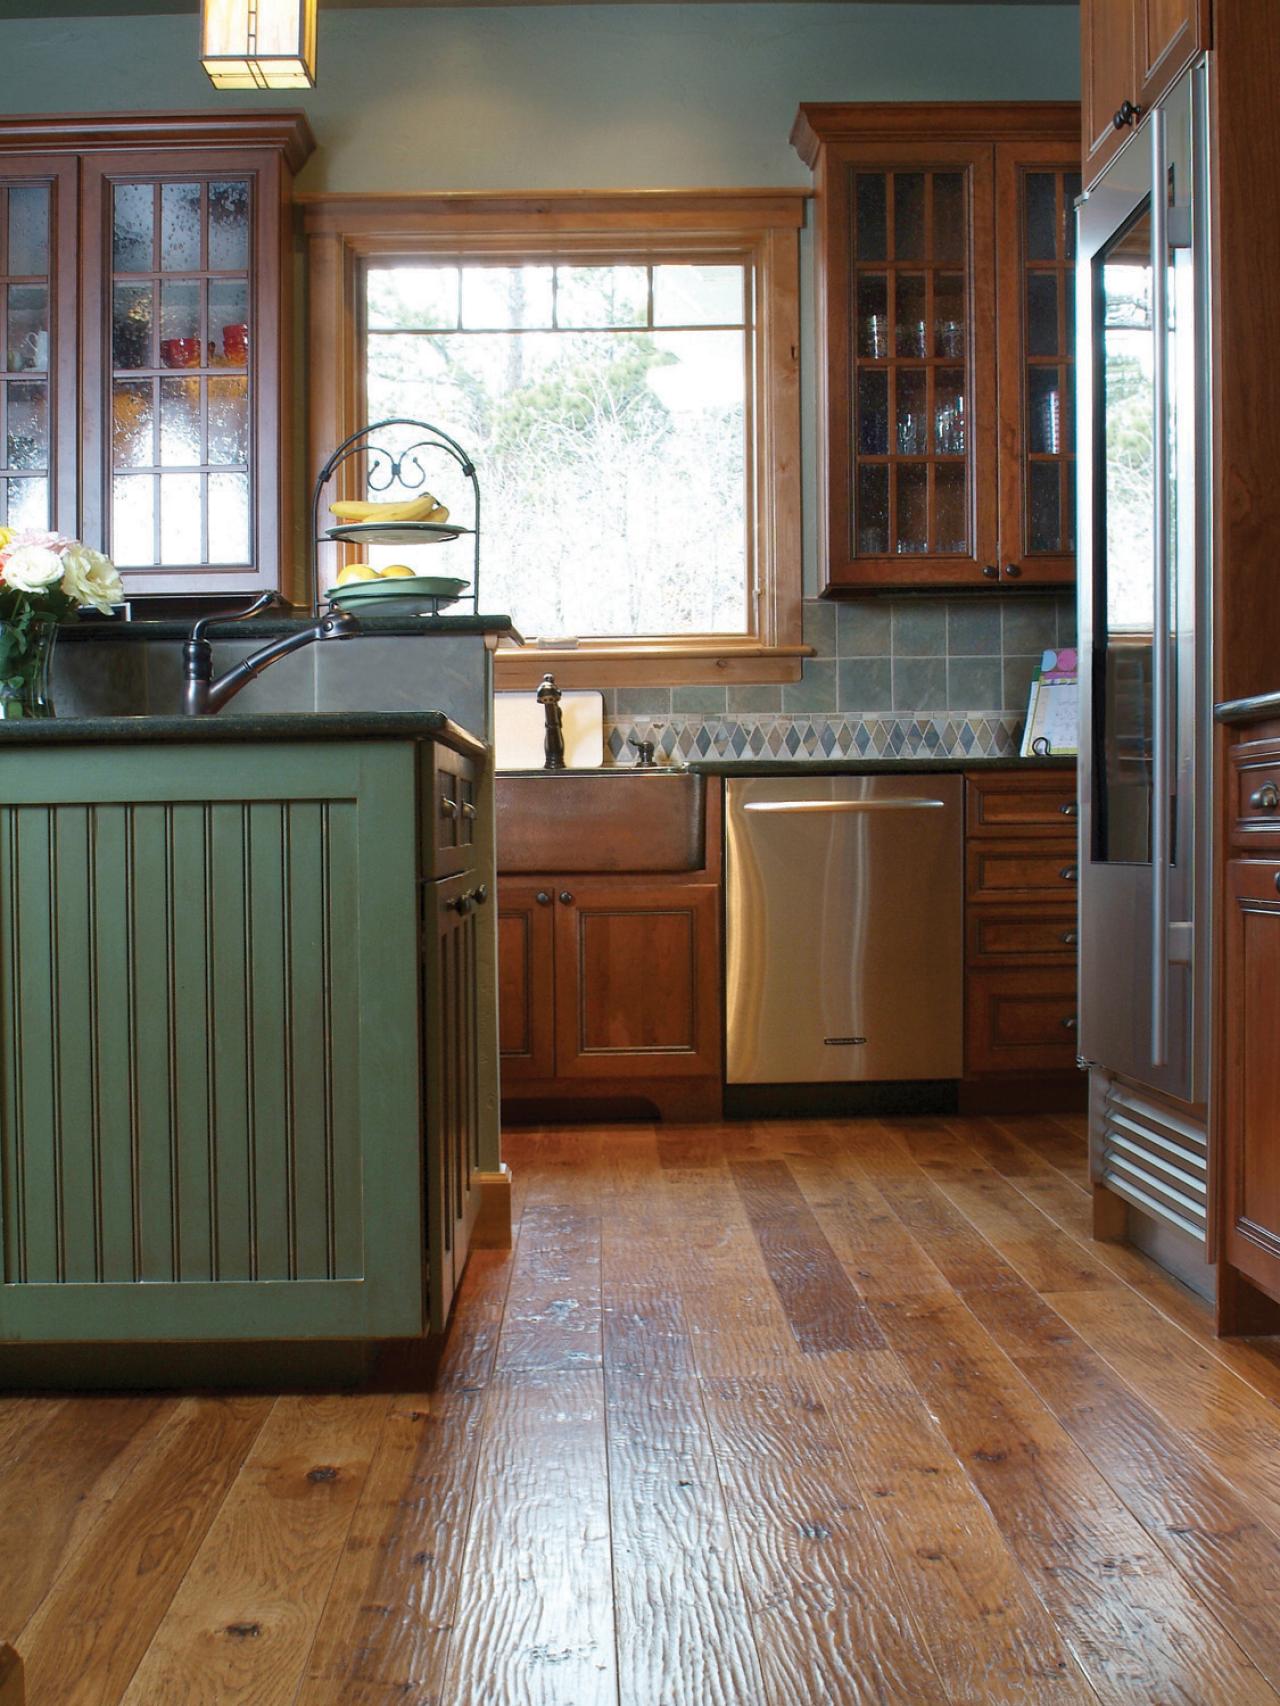 Reclaimed Hardwood Flooring Diy, Is It A Good Idea To Have Hardwood Floors In The Kitchen